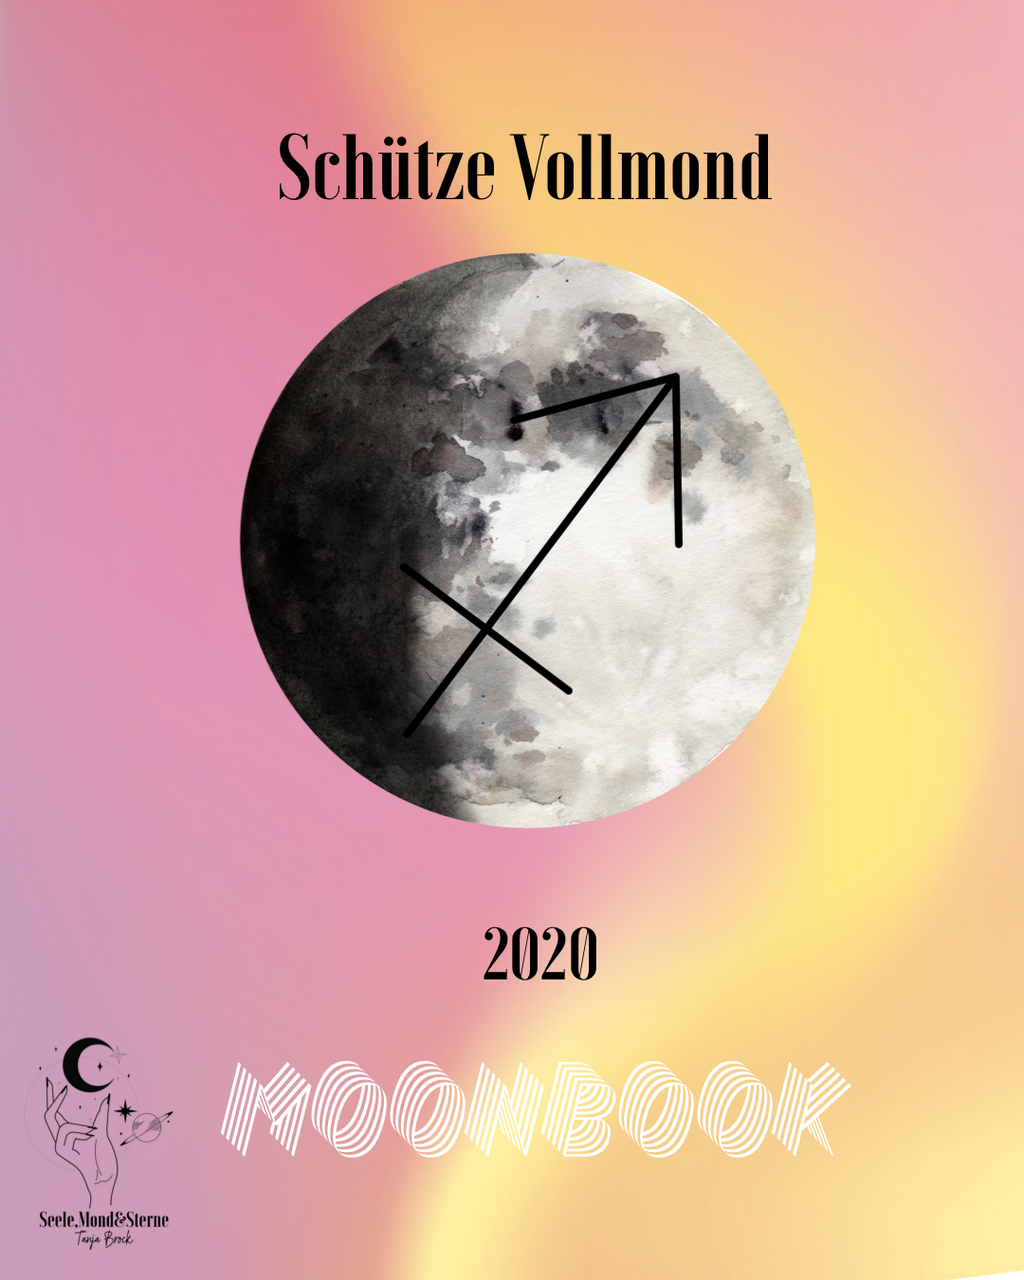 MoonBook: Schütze-Vollmond - Innerwisdom-Shop, Tanja Brock 